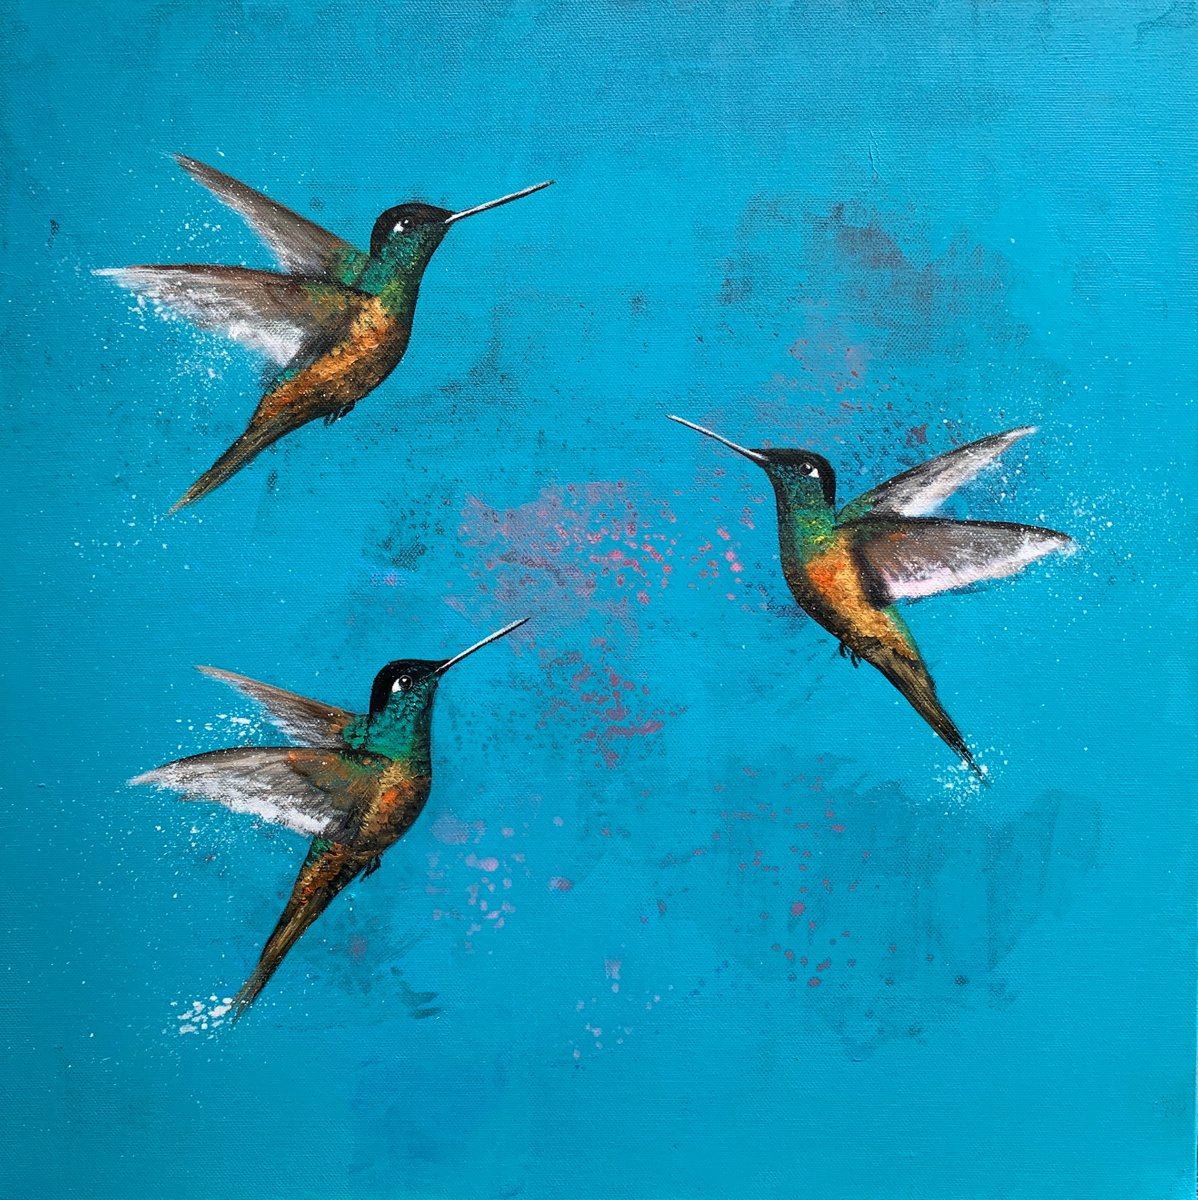 Flight Of The Hummingbird by Laure Bury